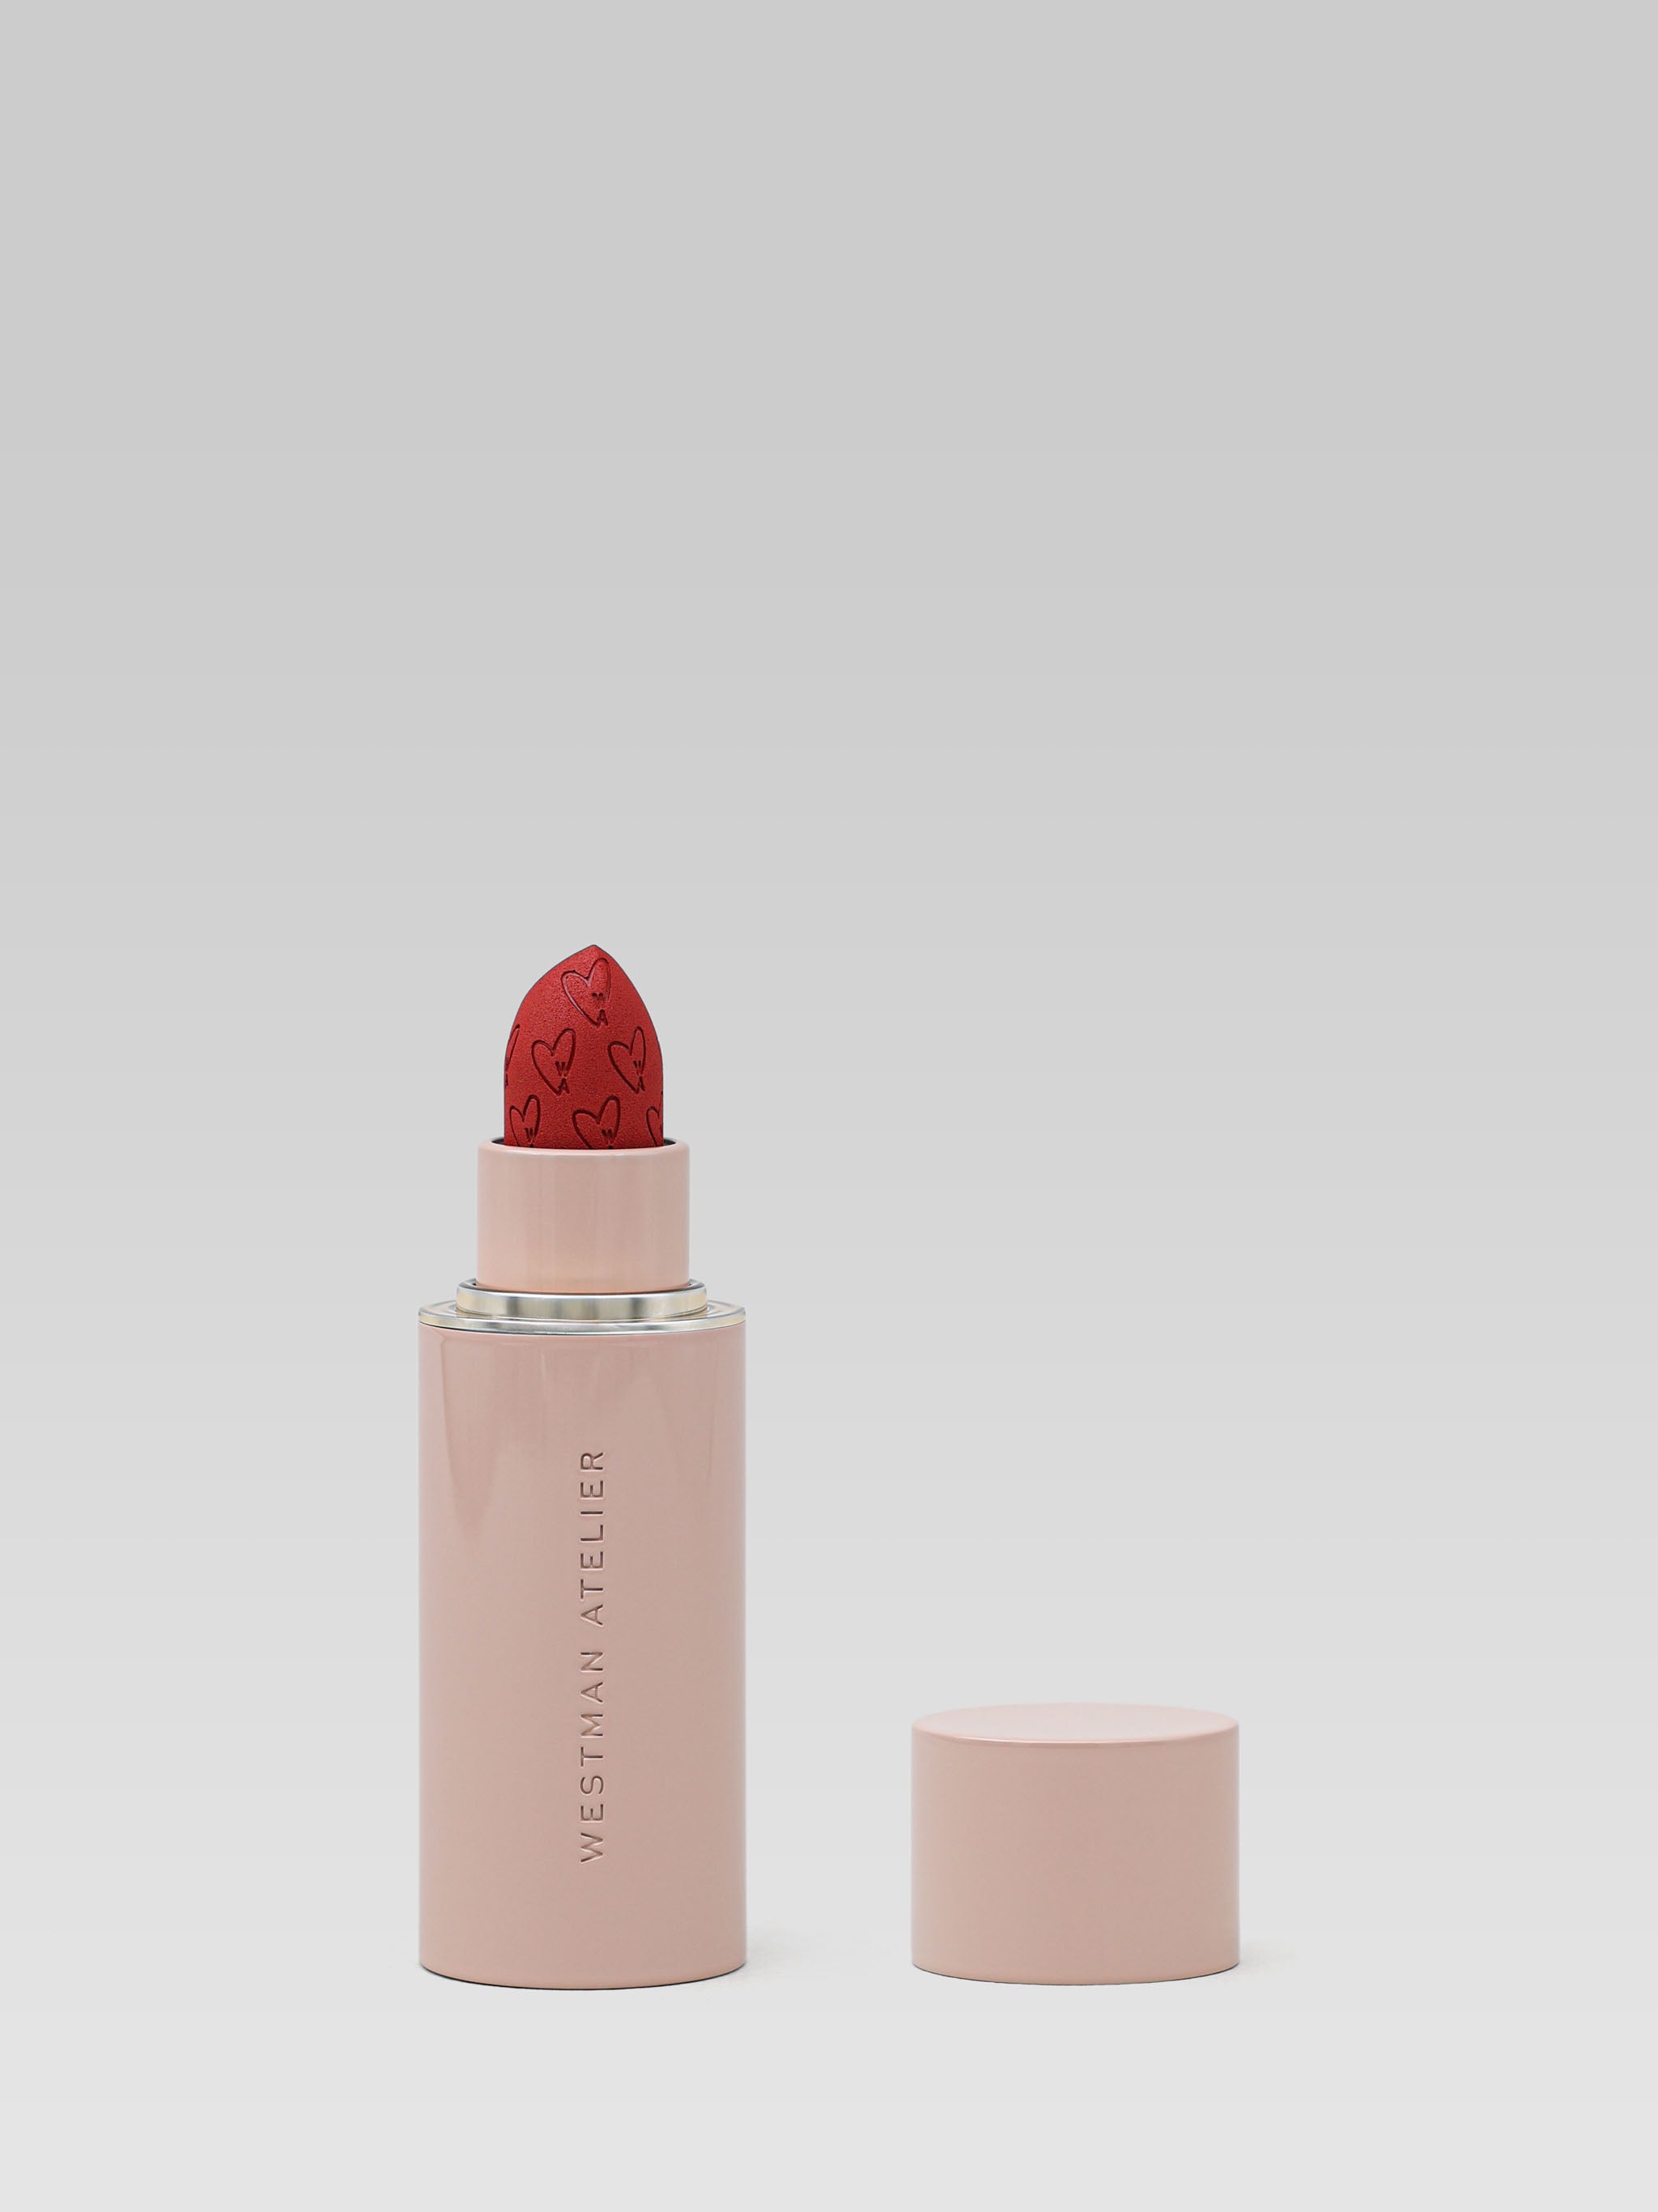 Westman Atelier Lip Suede Matte Lipstick in Ma Biche product shot